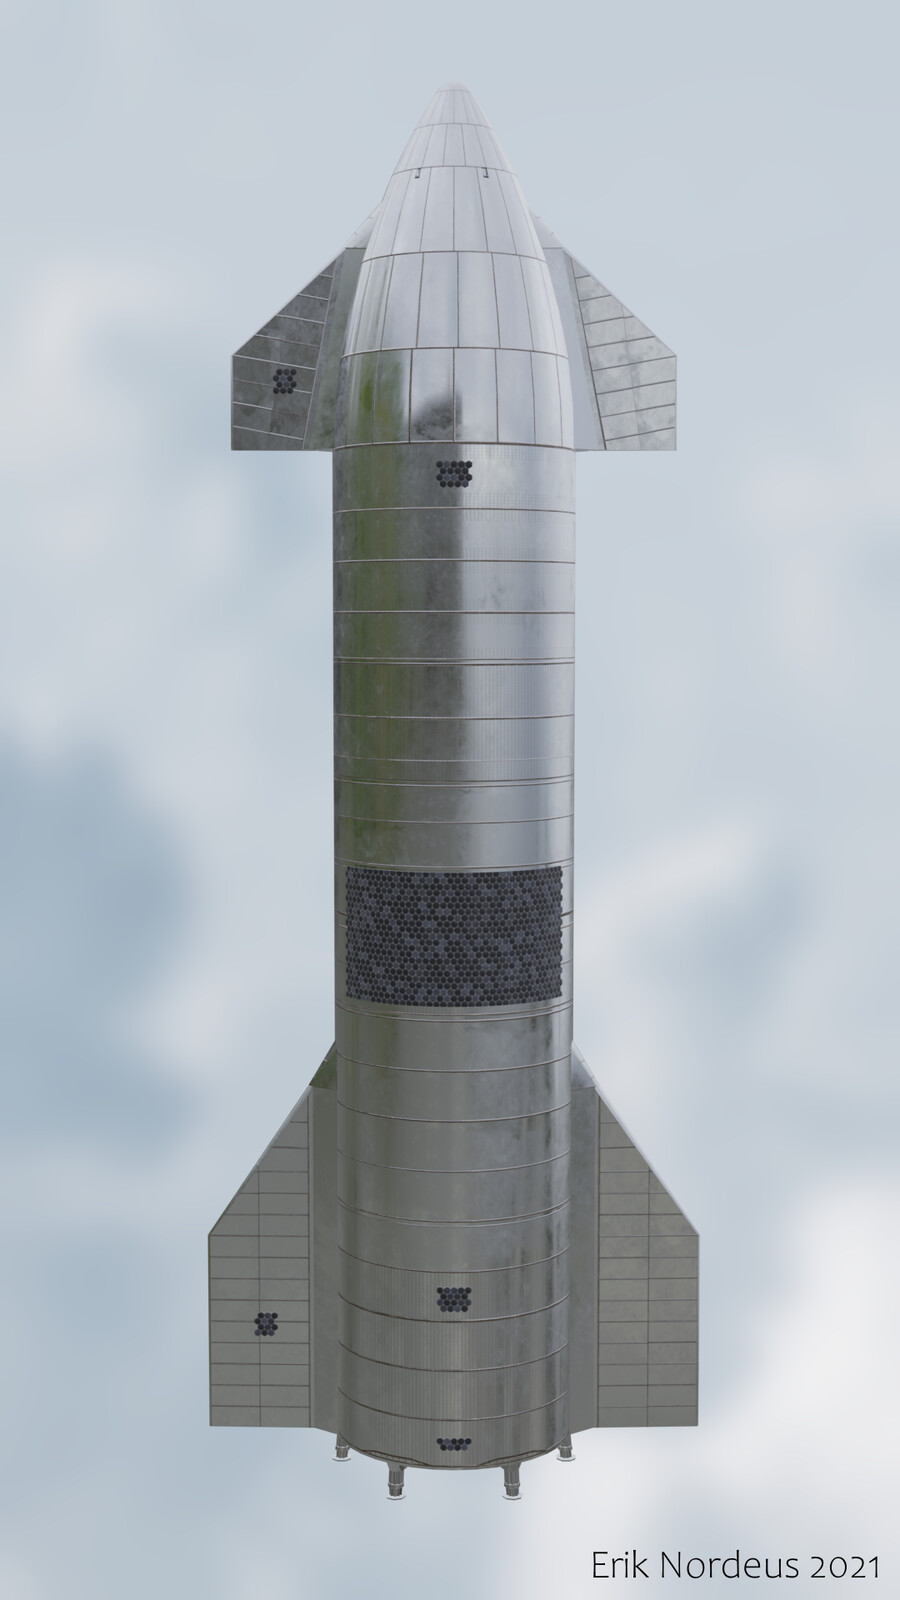 SpaceX Starship prototype rocket